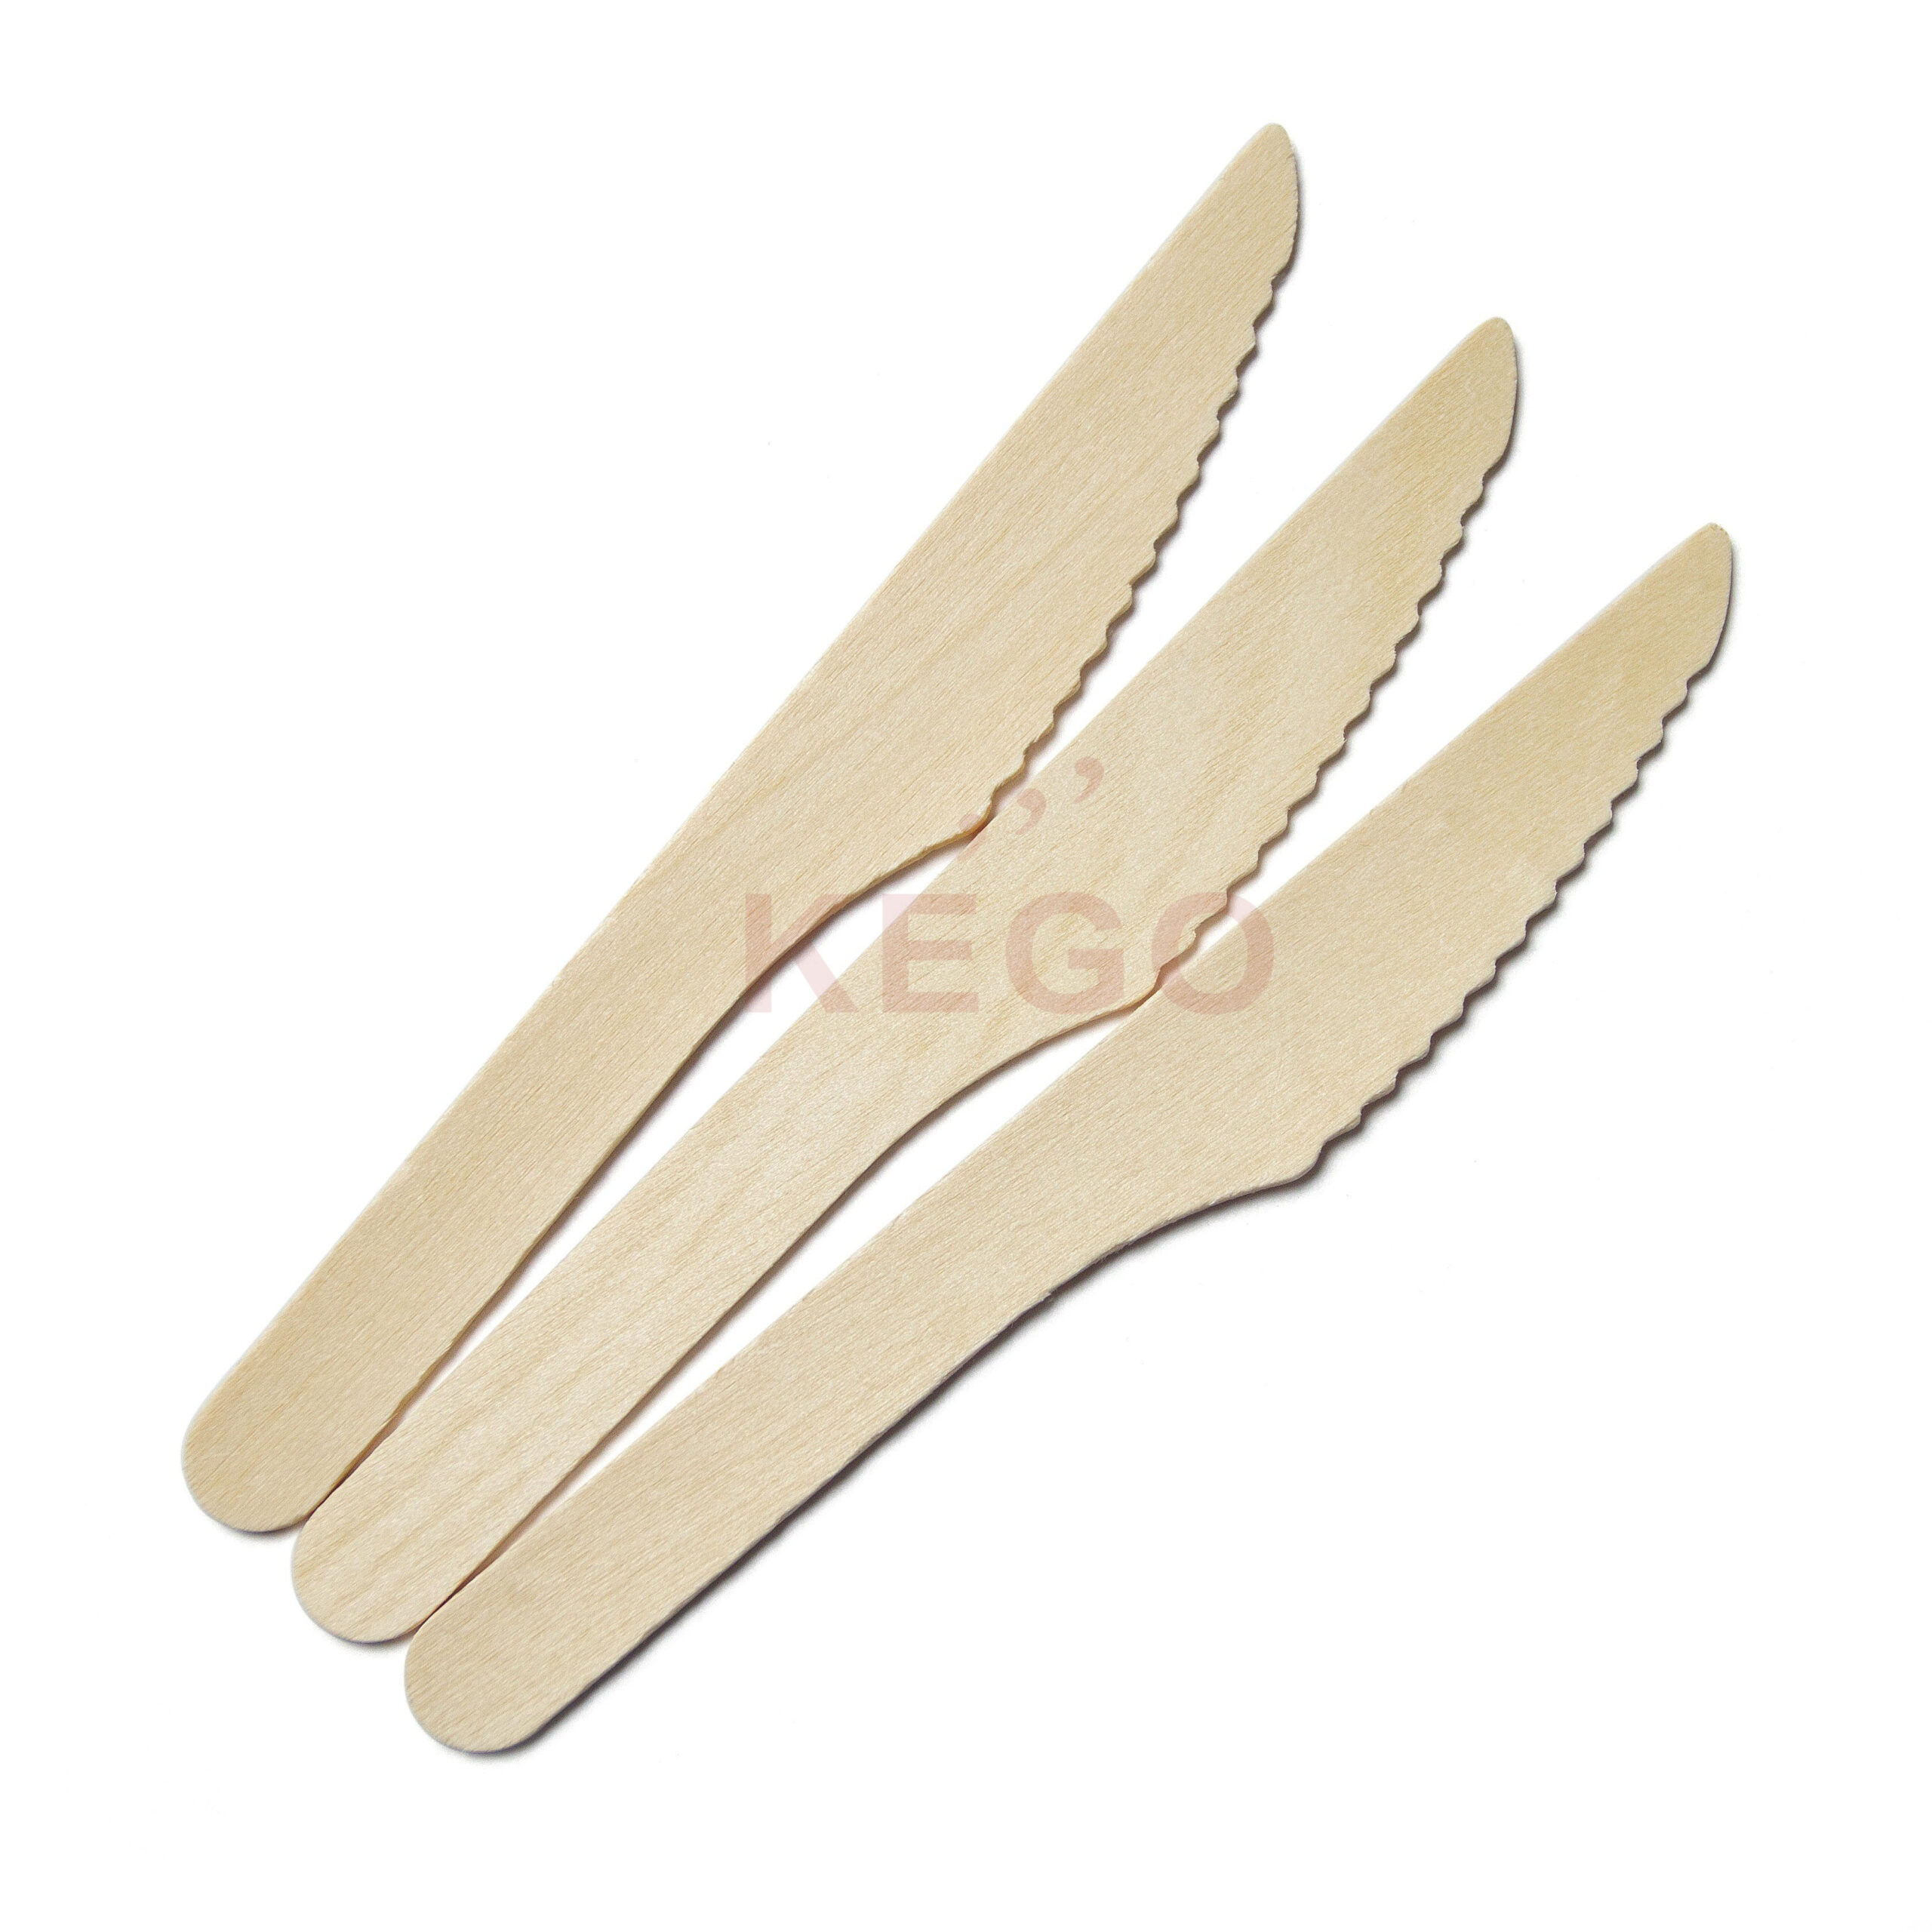 https://kego.vn/wp-content/uploads/2015/09/Disposable-Wooden-Knife-165-3-scaled.jpg